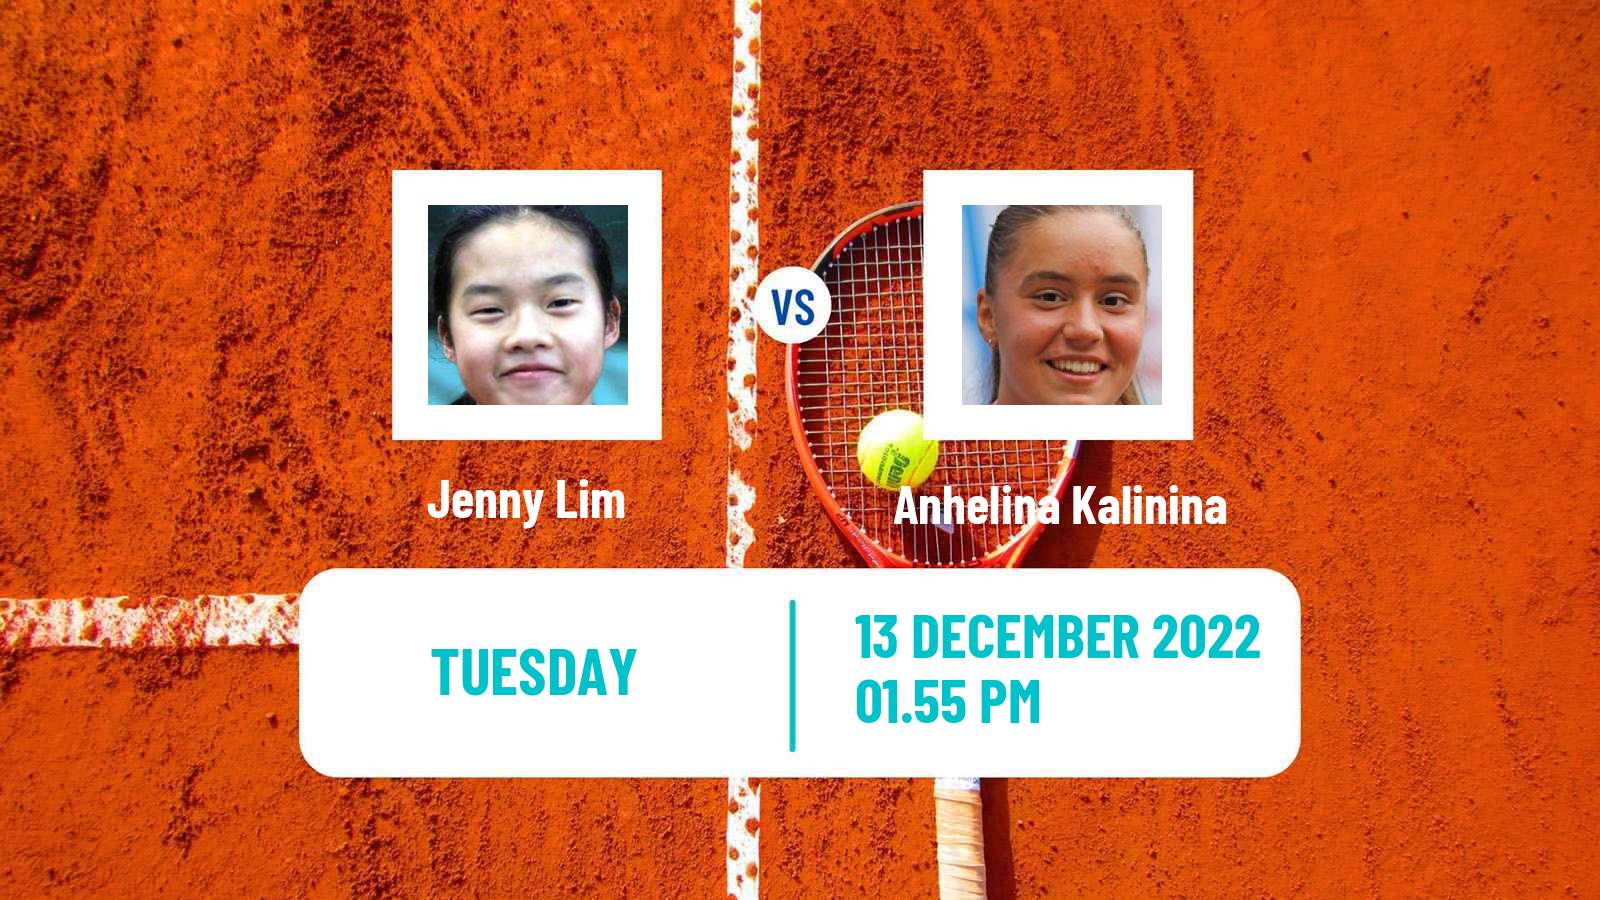 Tennis ATP Challenger Jenny Lim - Anhelina Kalinina